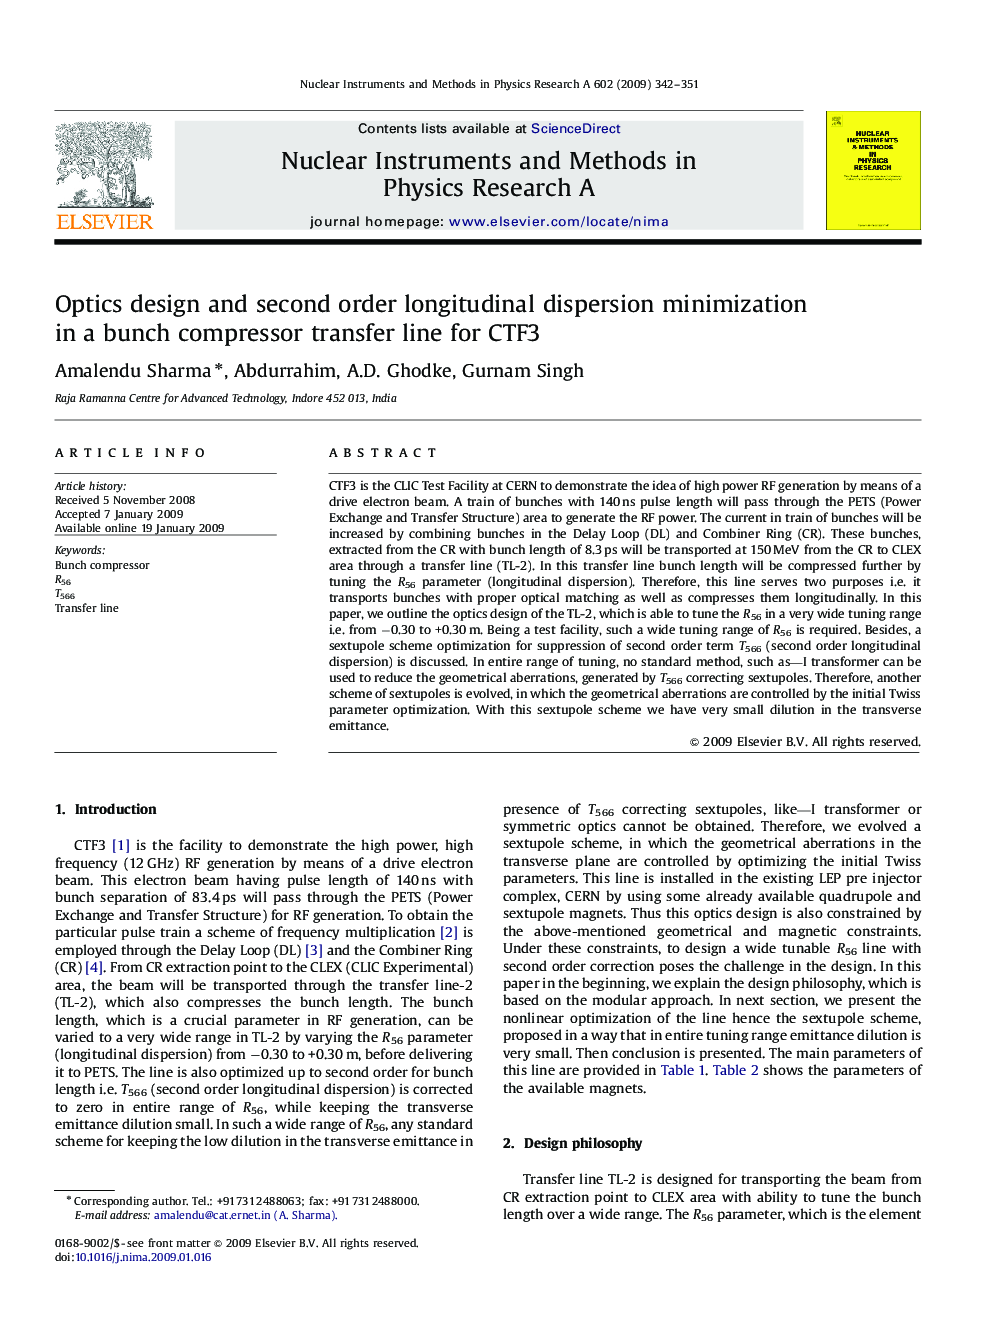 Optics design and second order longitudinal dispersion minimization in a bunch compressor transfer line for CTF3